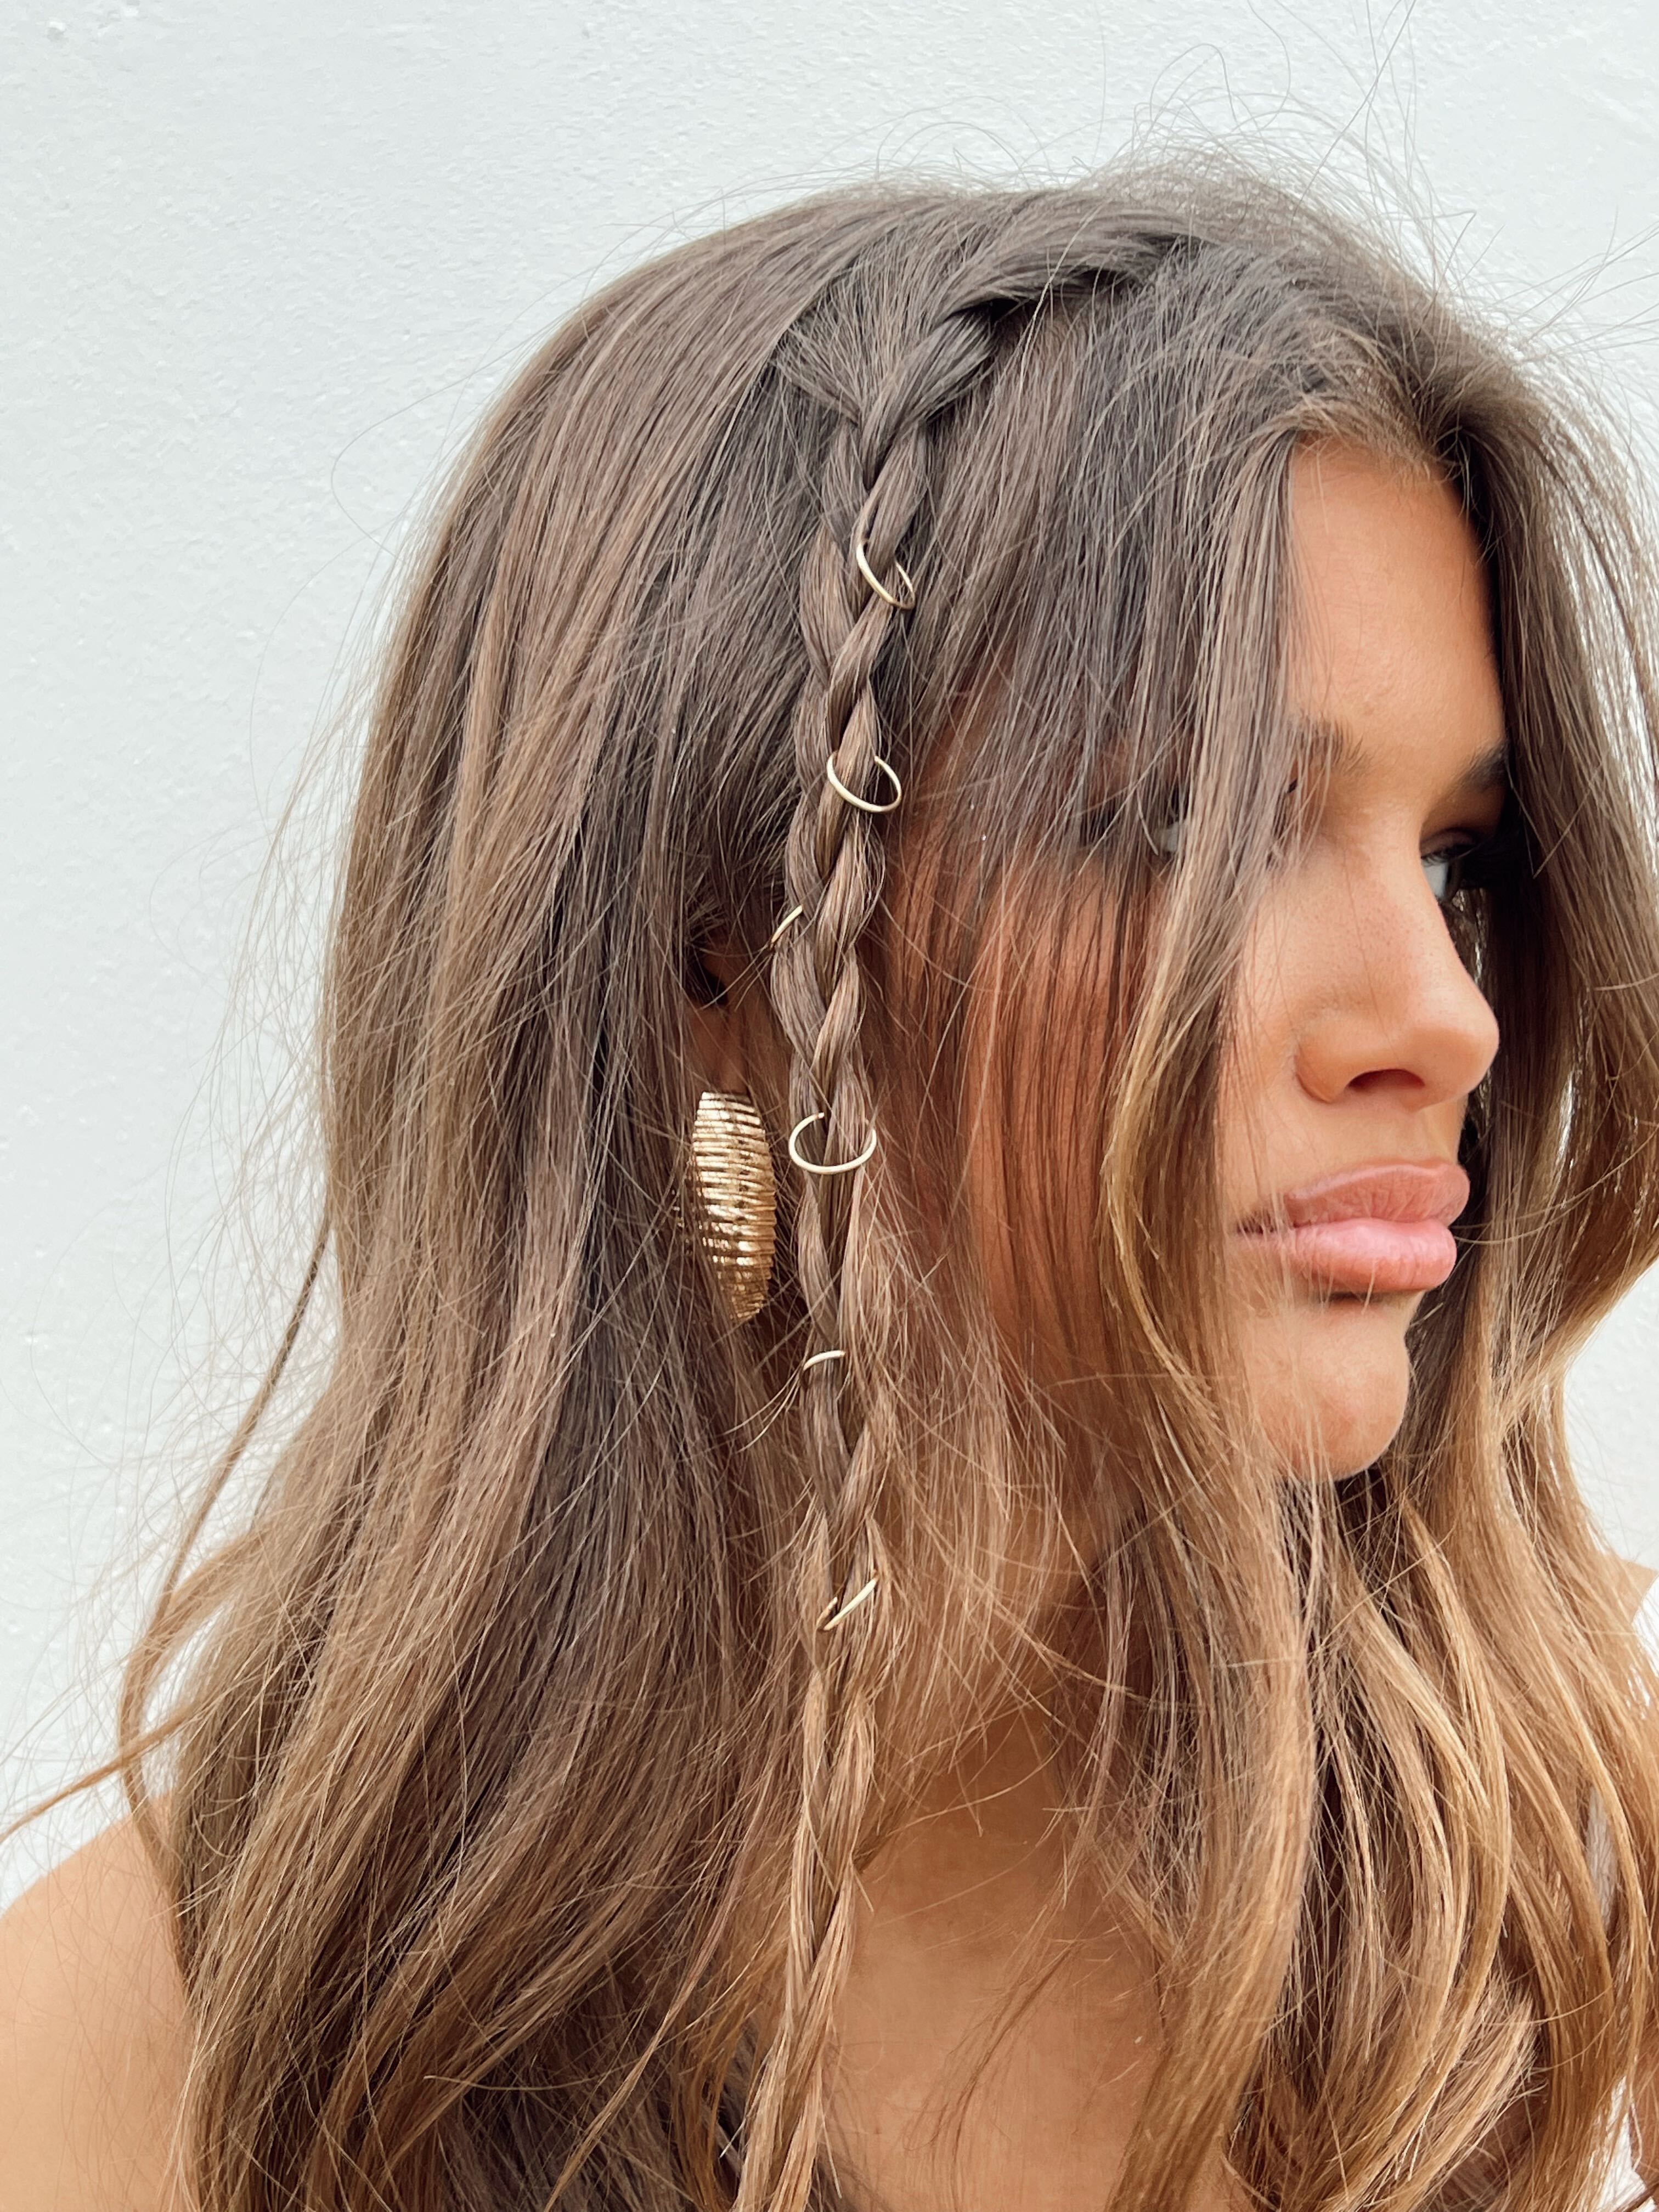 100PCS DIY WOMEN Girls Dreadlocks Beads Braided Hair Rings Accessories Clip  Pins £3.85 - PicClick UK